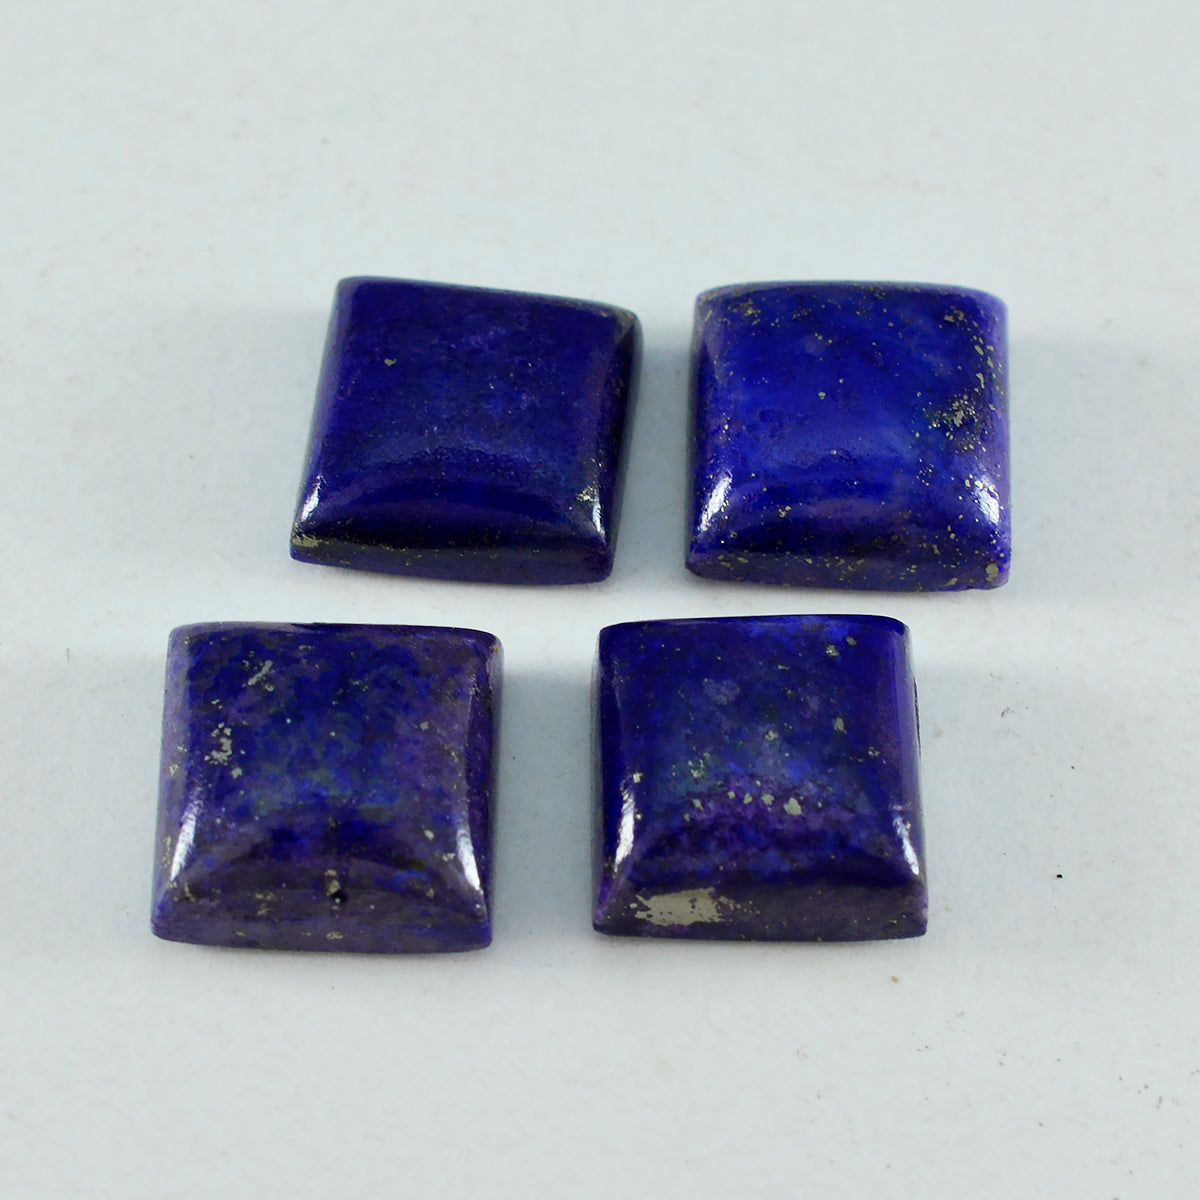 Riyogems 1PC Blauwe Lapis Lazuli Cabochon 15x15 mm Vierkante Vorm A1 Kwaliteit Steen